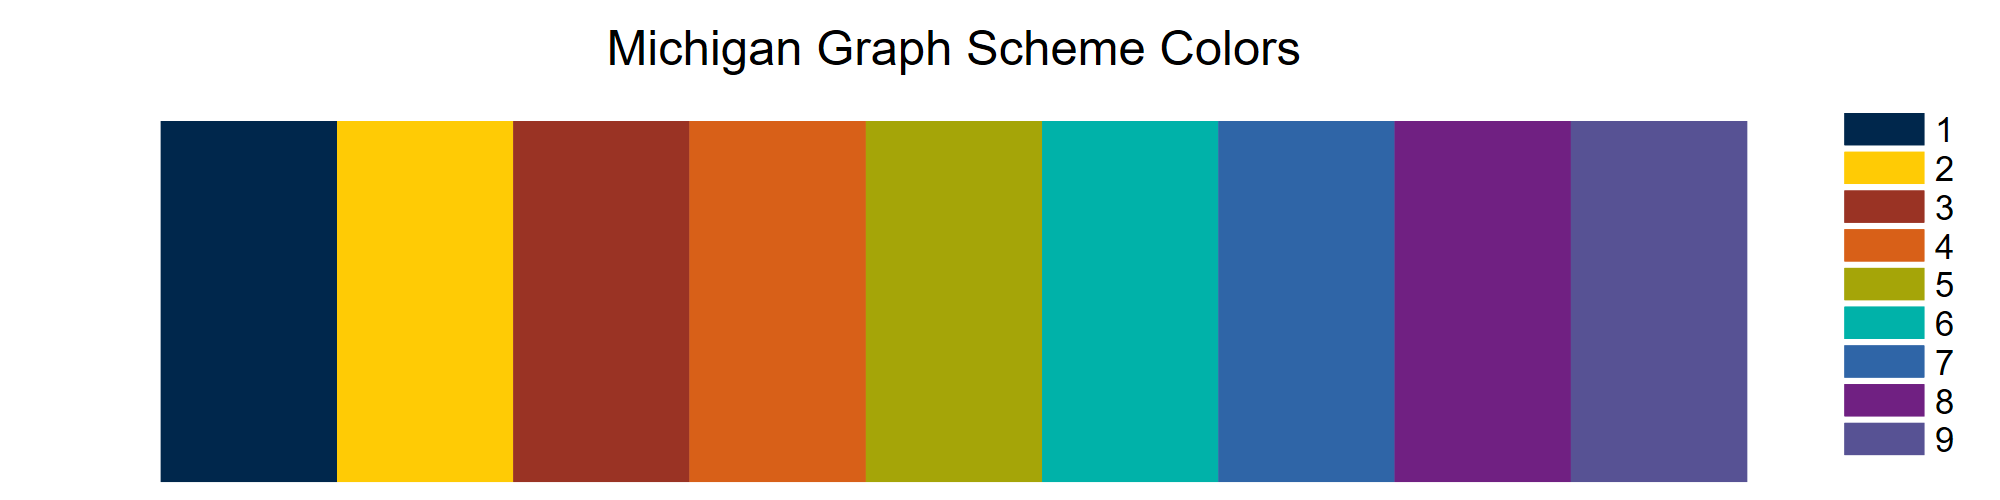 Colors in Michigan Graph Scheme